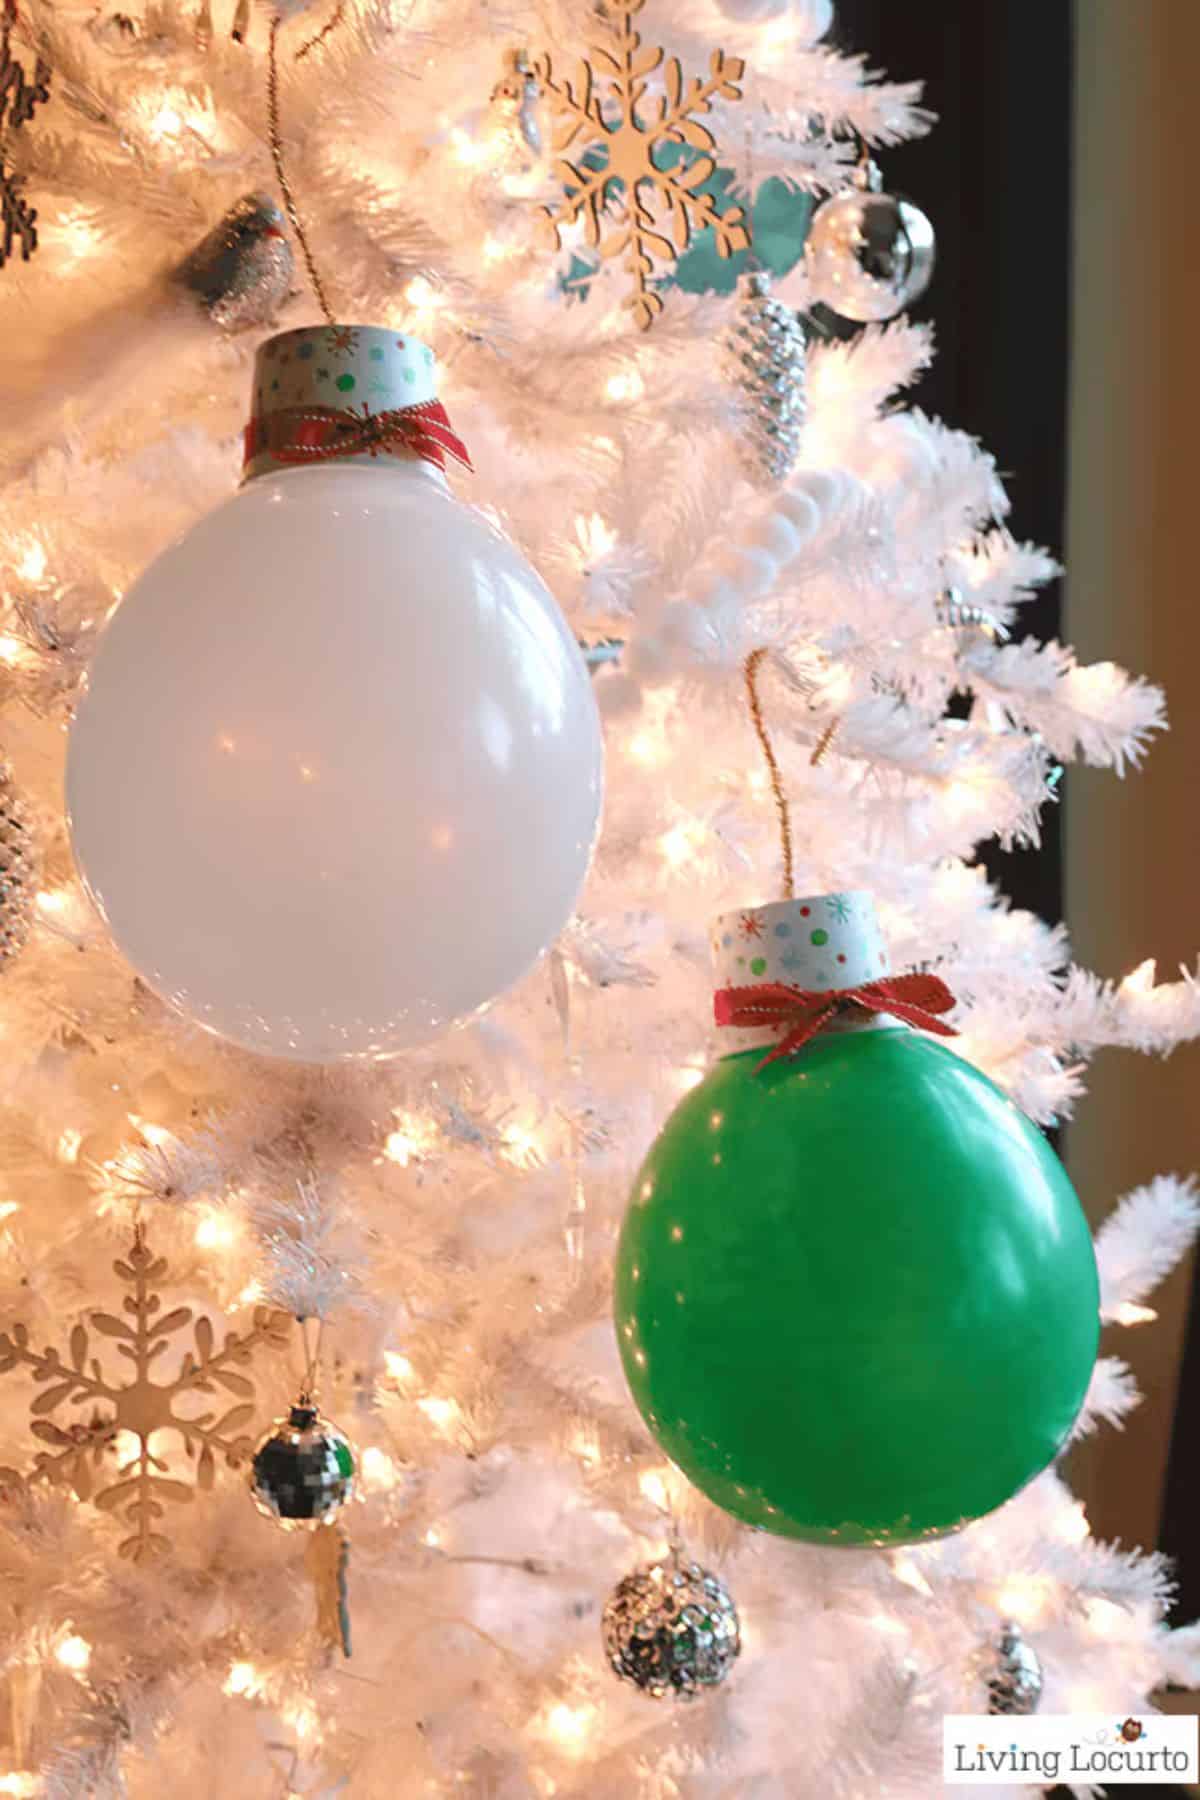 Giant Balloon Christmas Lights and Ornaments